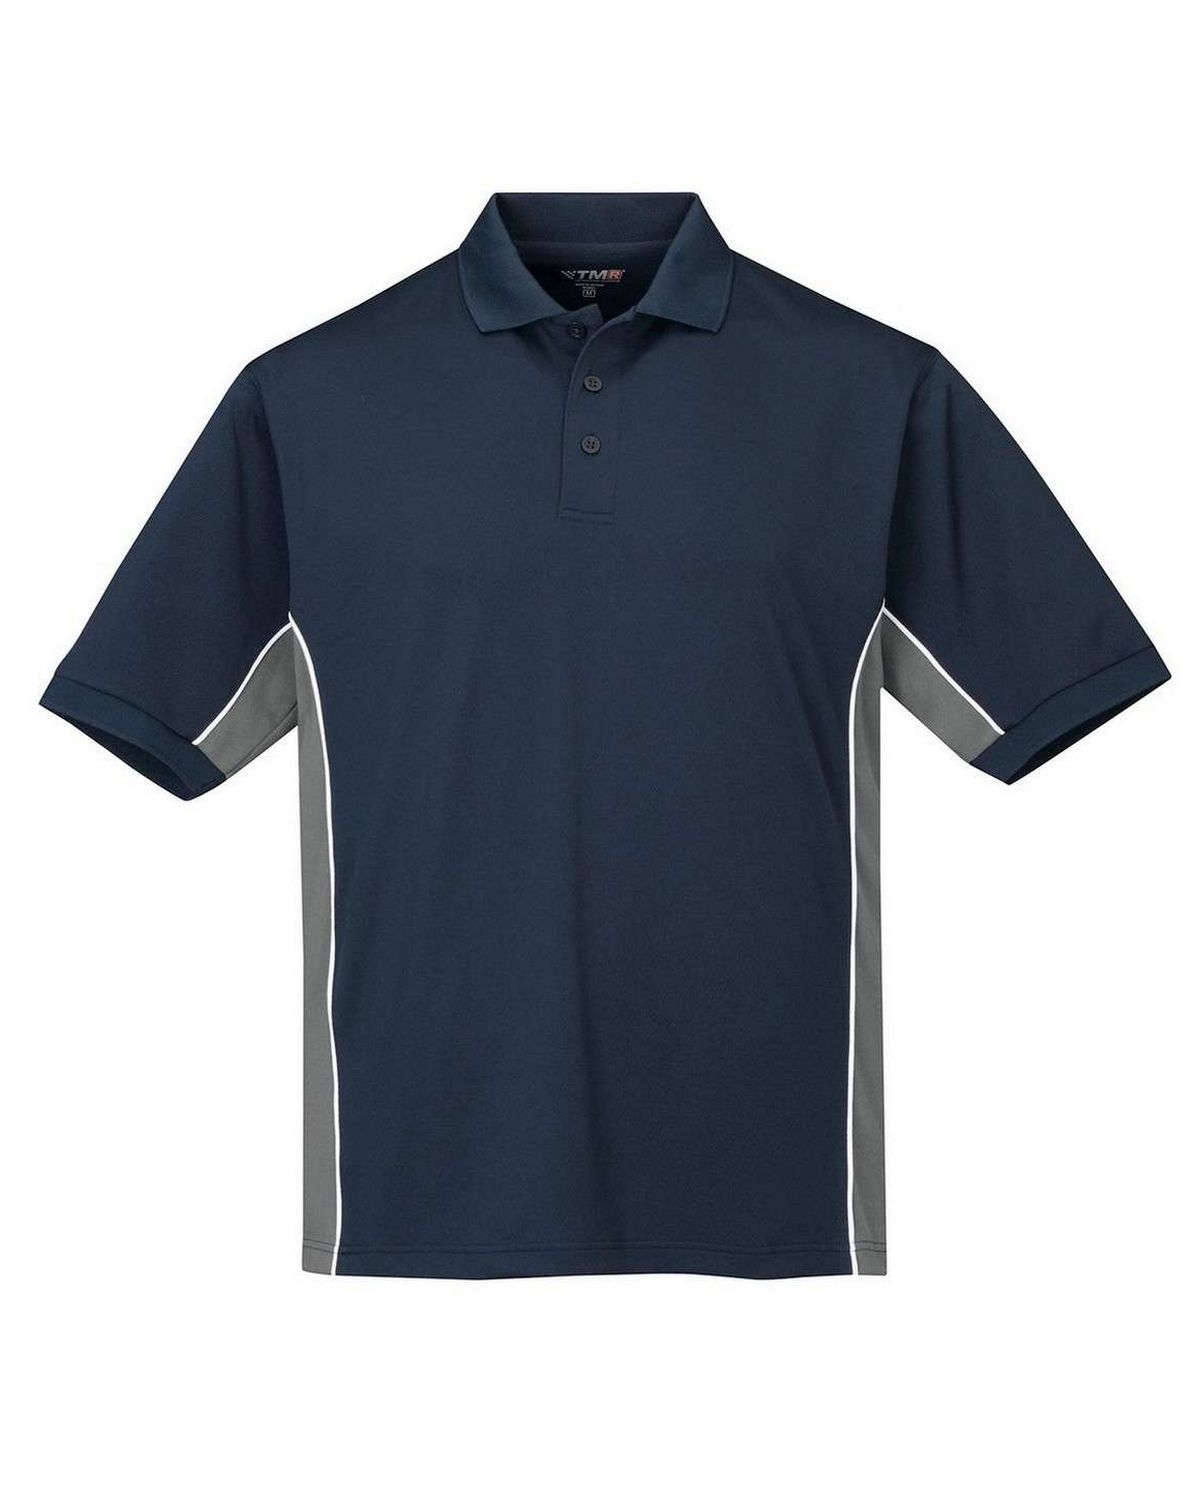 Tri-Mountain Racewear 226 Men Knit Polo Shirt w/ Rib Collar